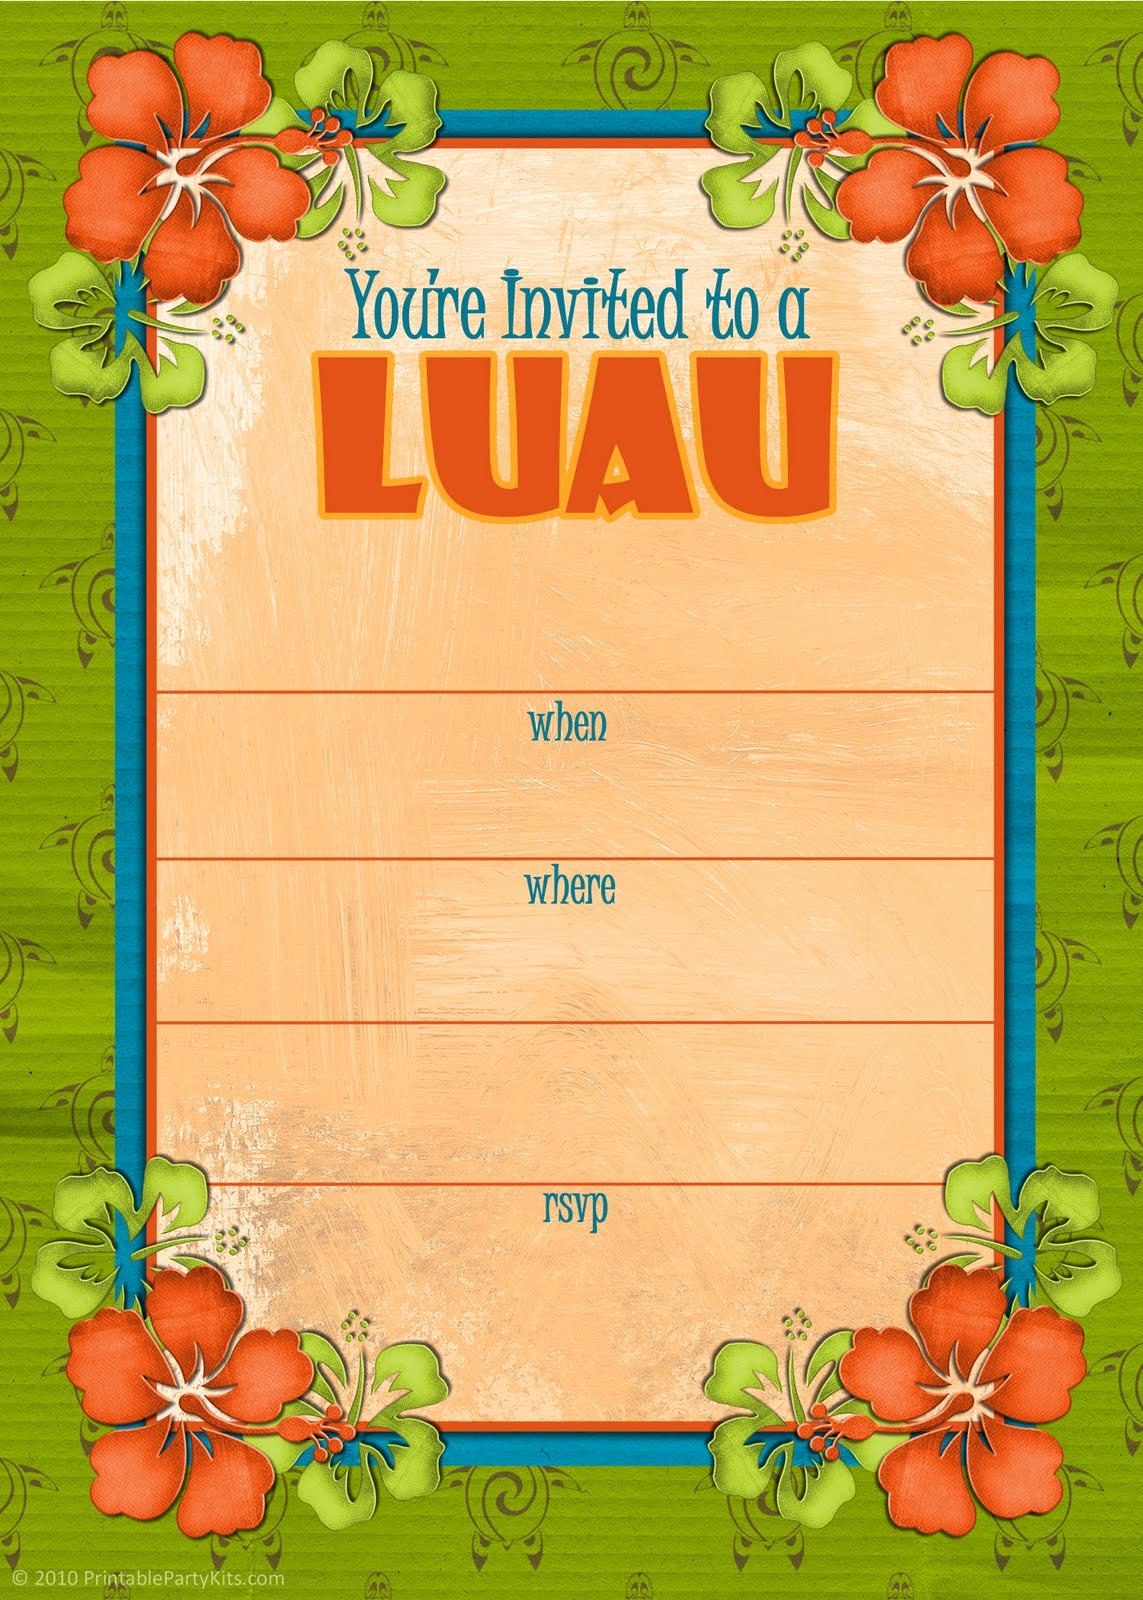 Hawaiian themed Invitation Template Elegant Free Printable Party Invitations Free Hawaiian Luau Invites